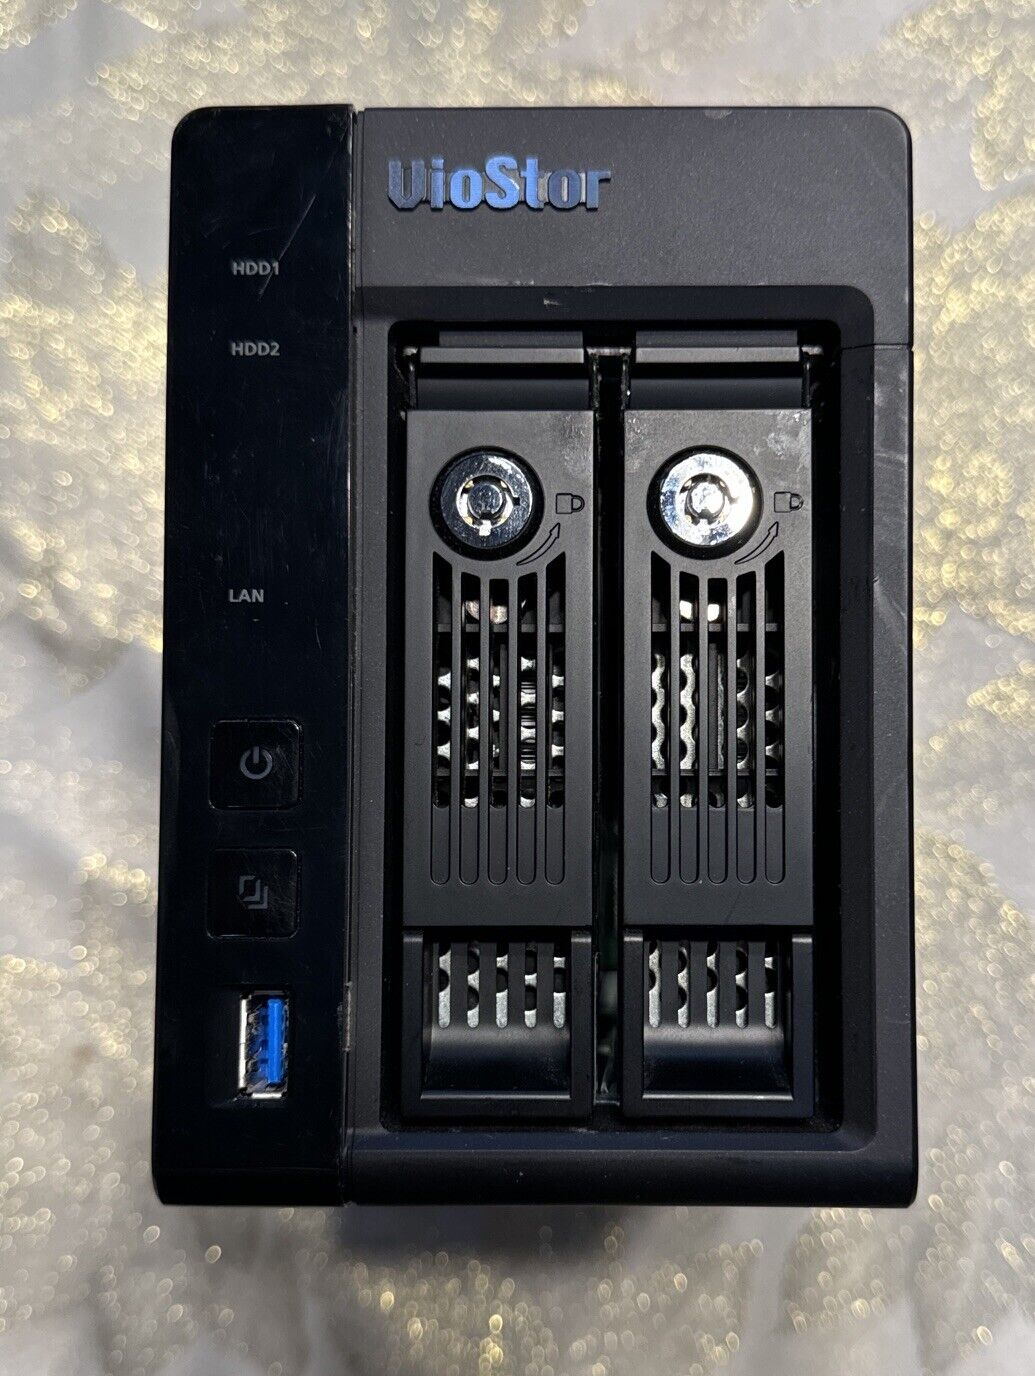 QNAP VioStor VS-2212 Pro+ Network Video Recorder (2) 4TB Hard Drives *Read*